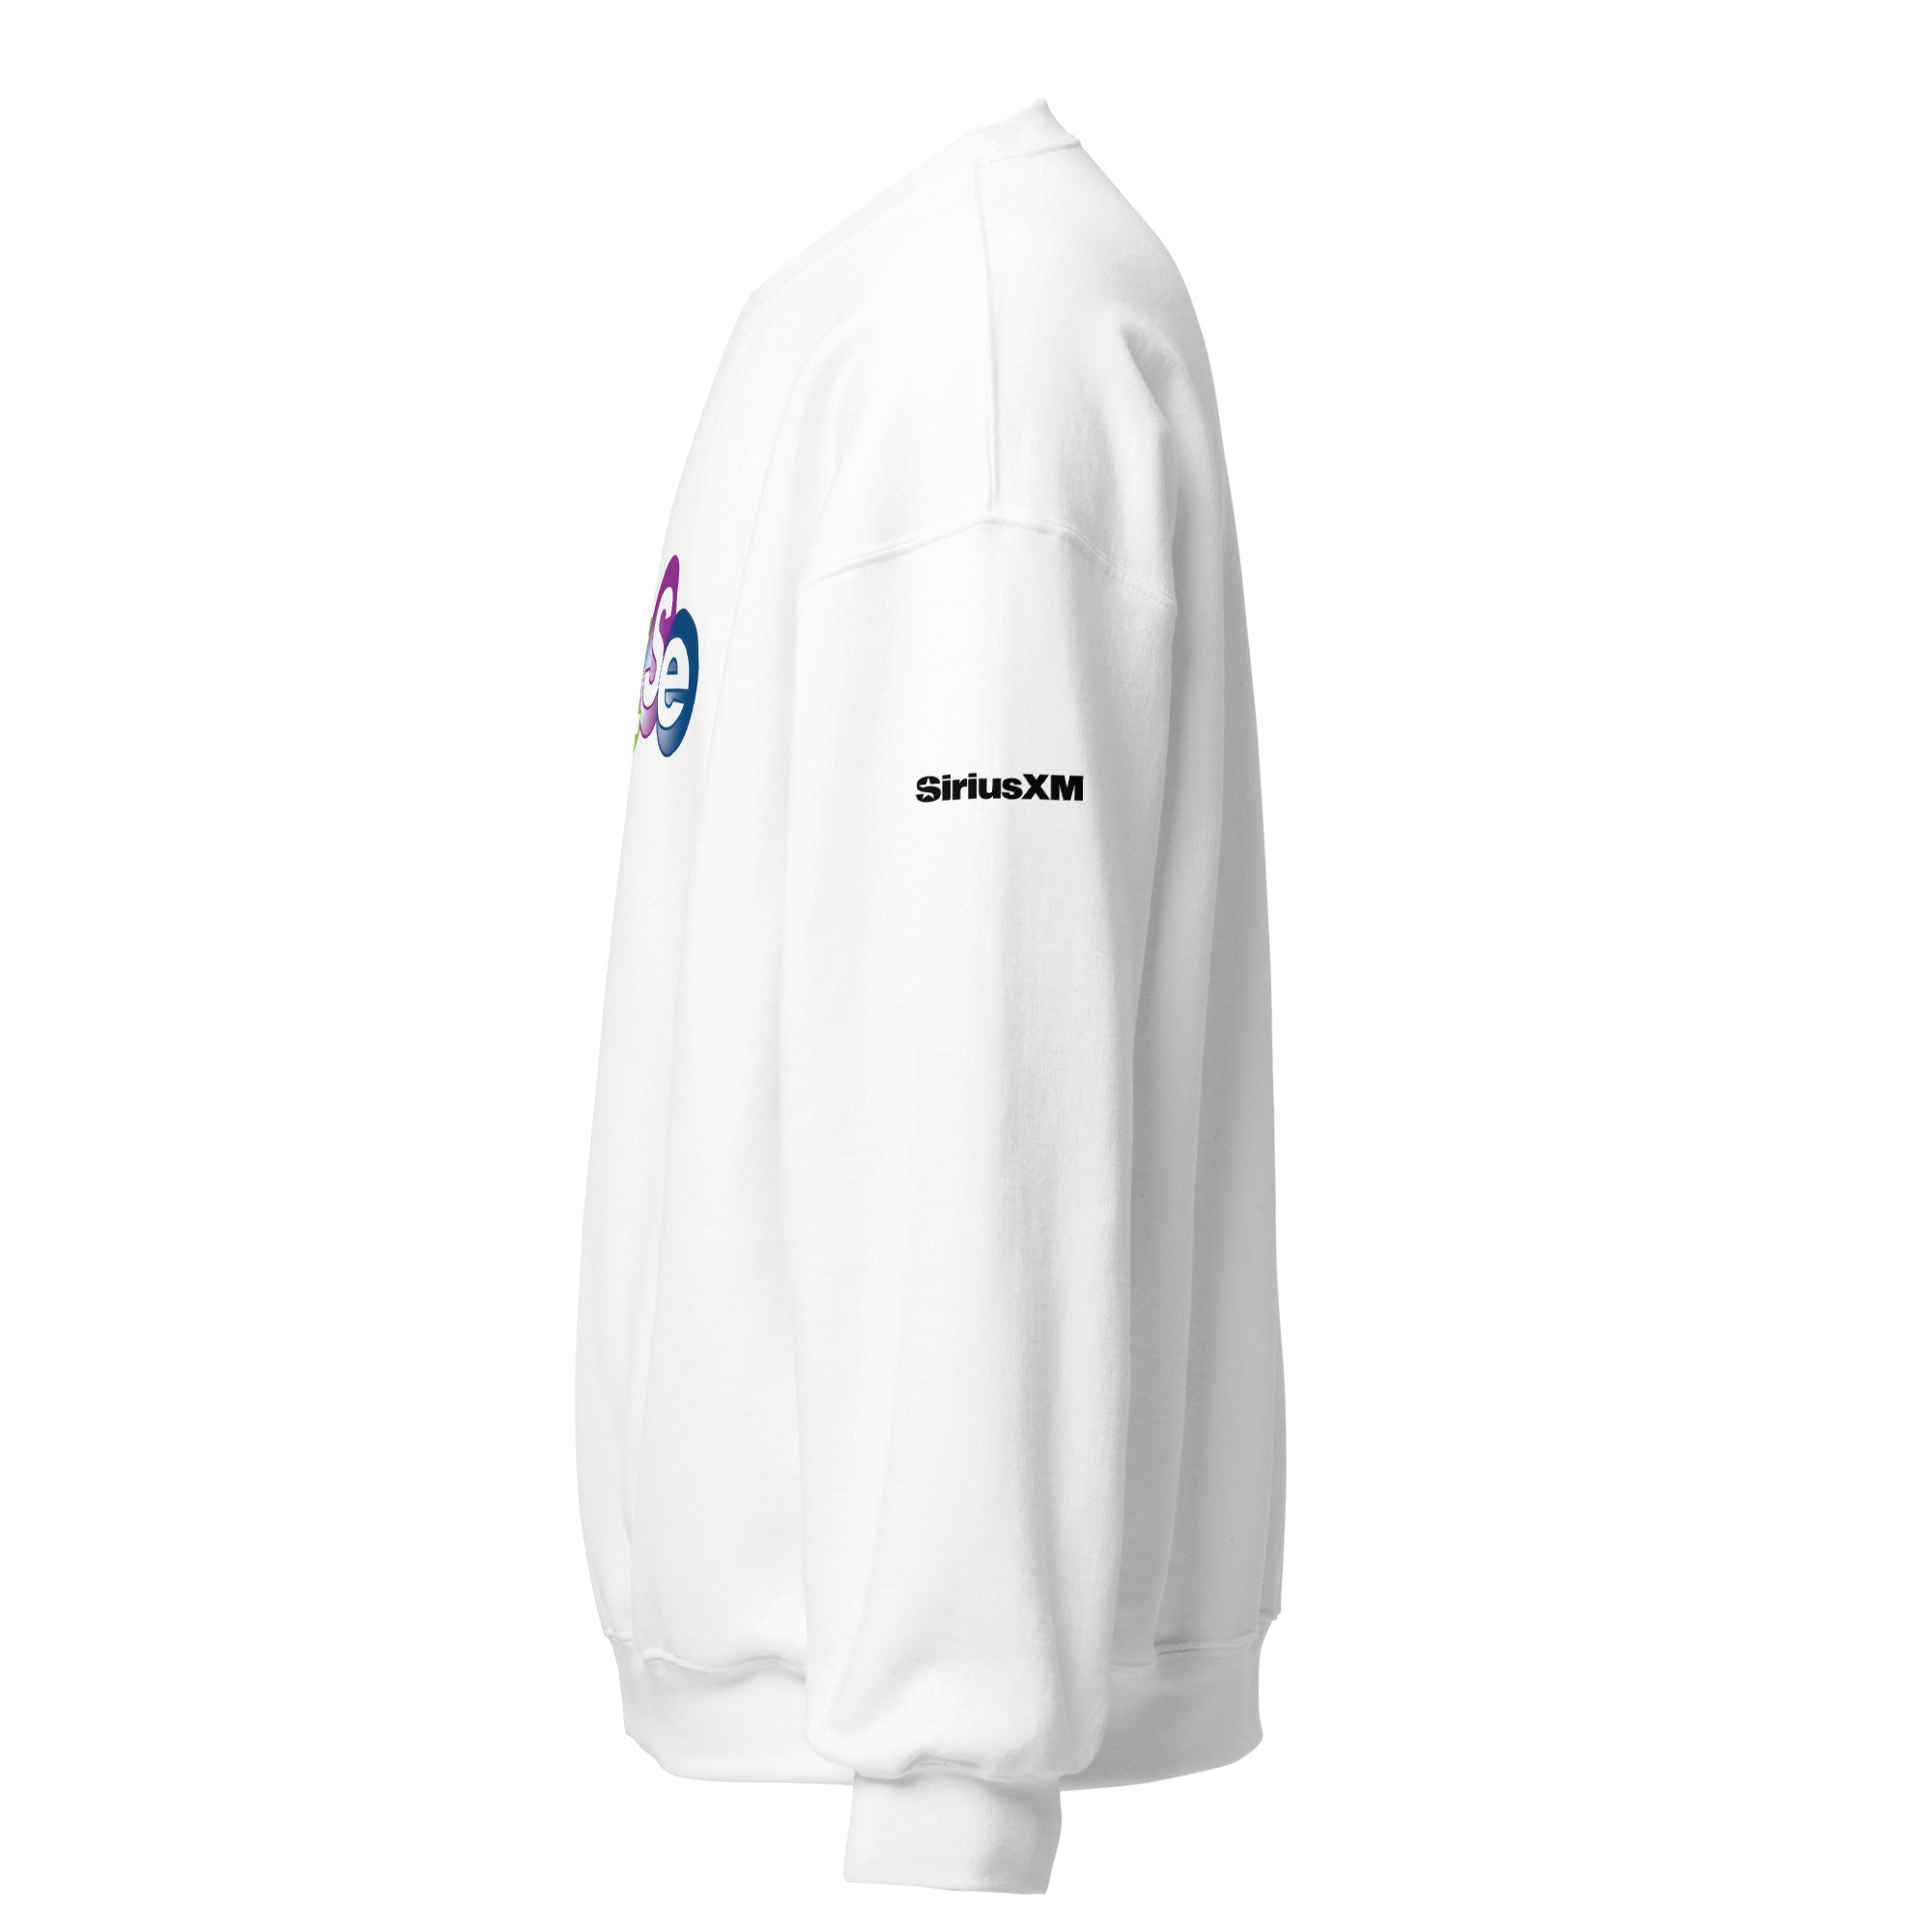 The Pulse: Sweatshirt (White)